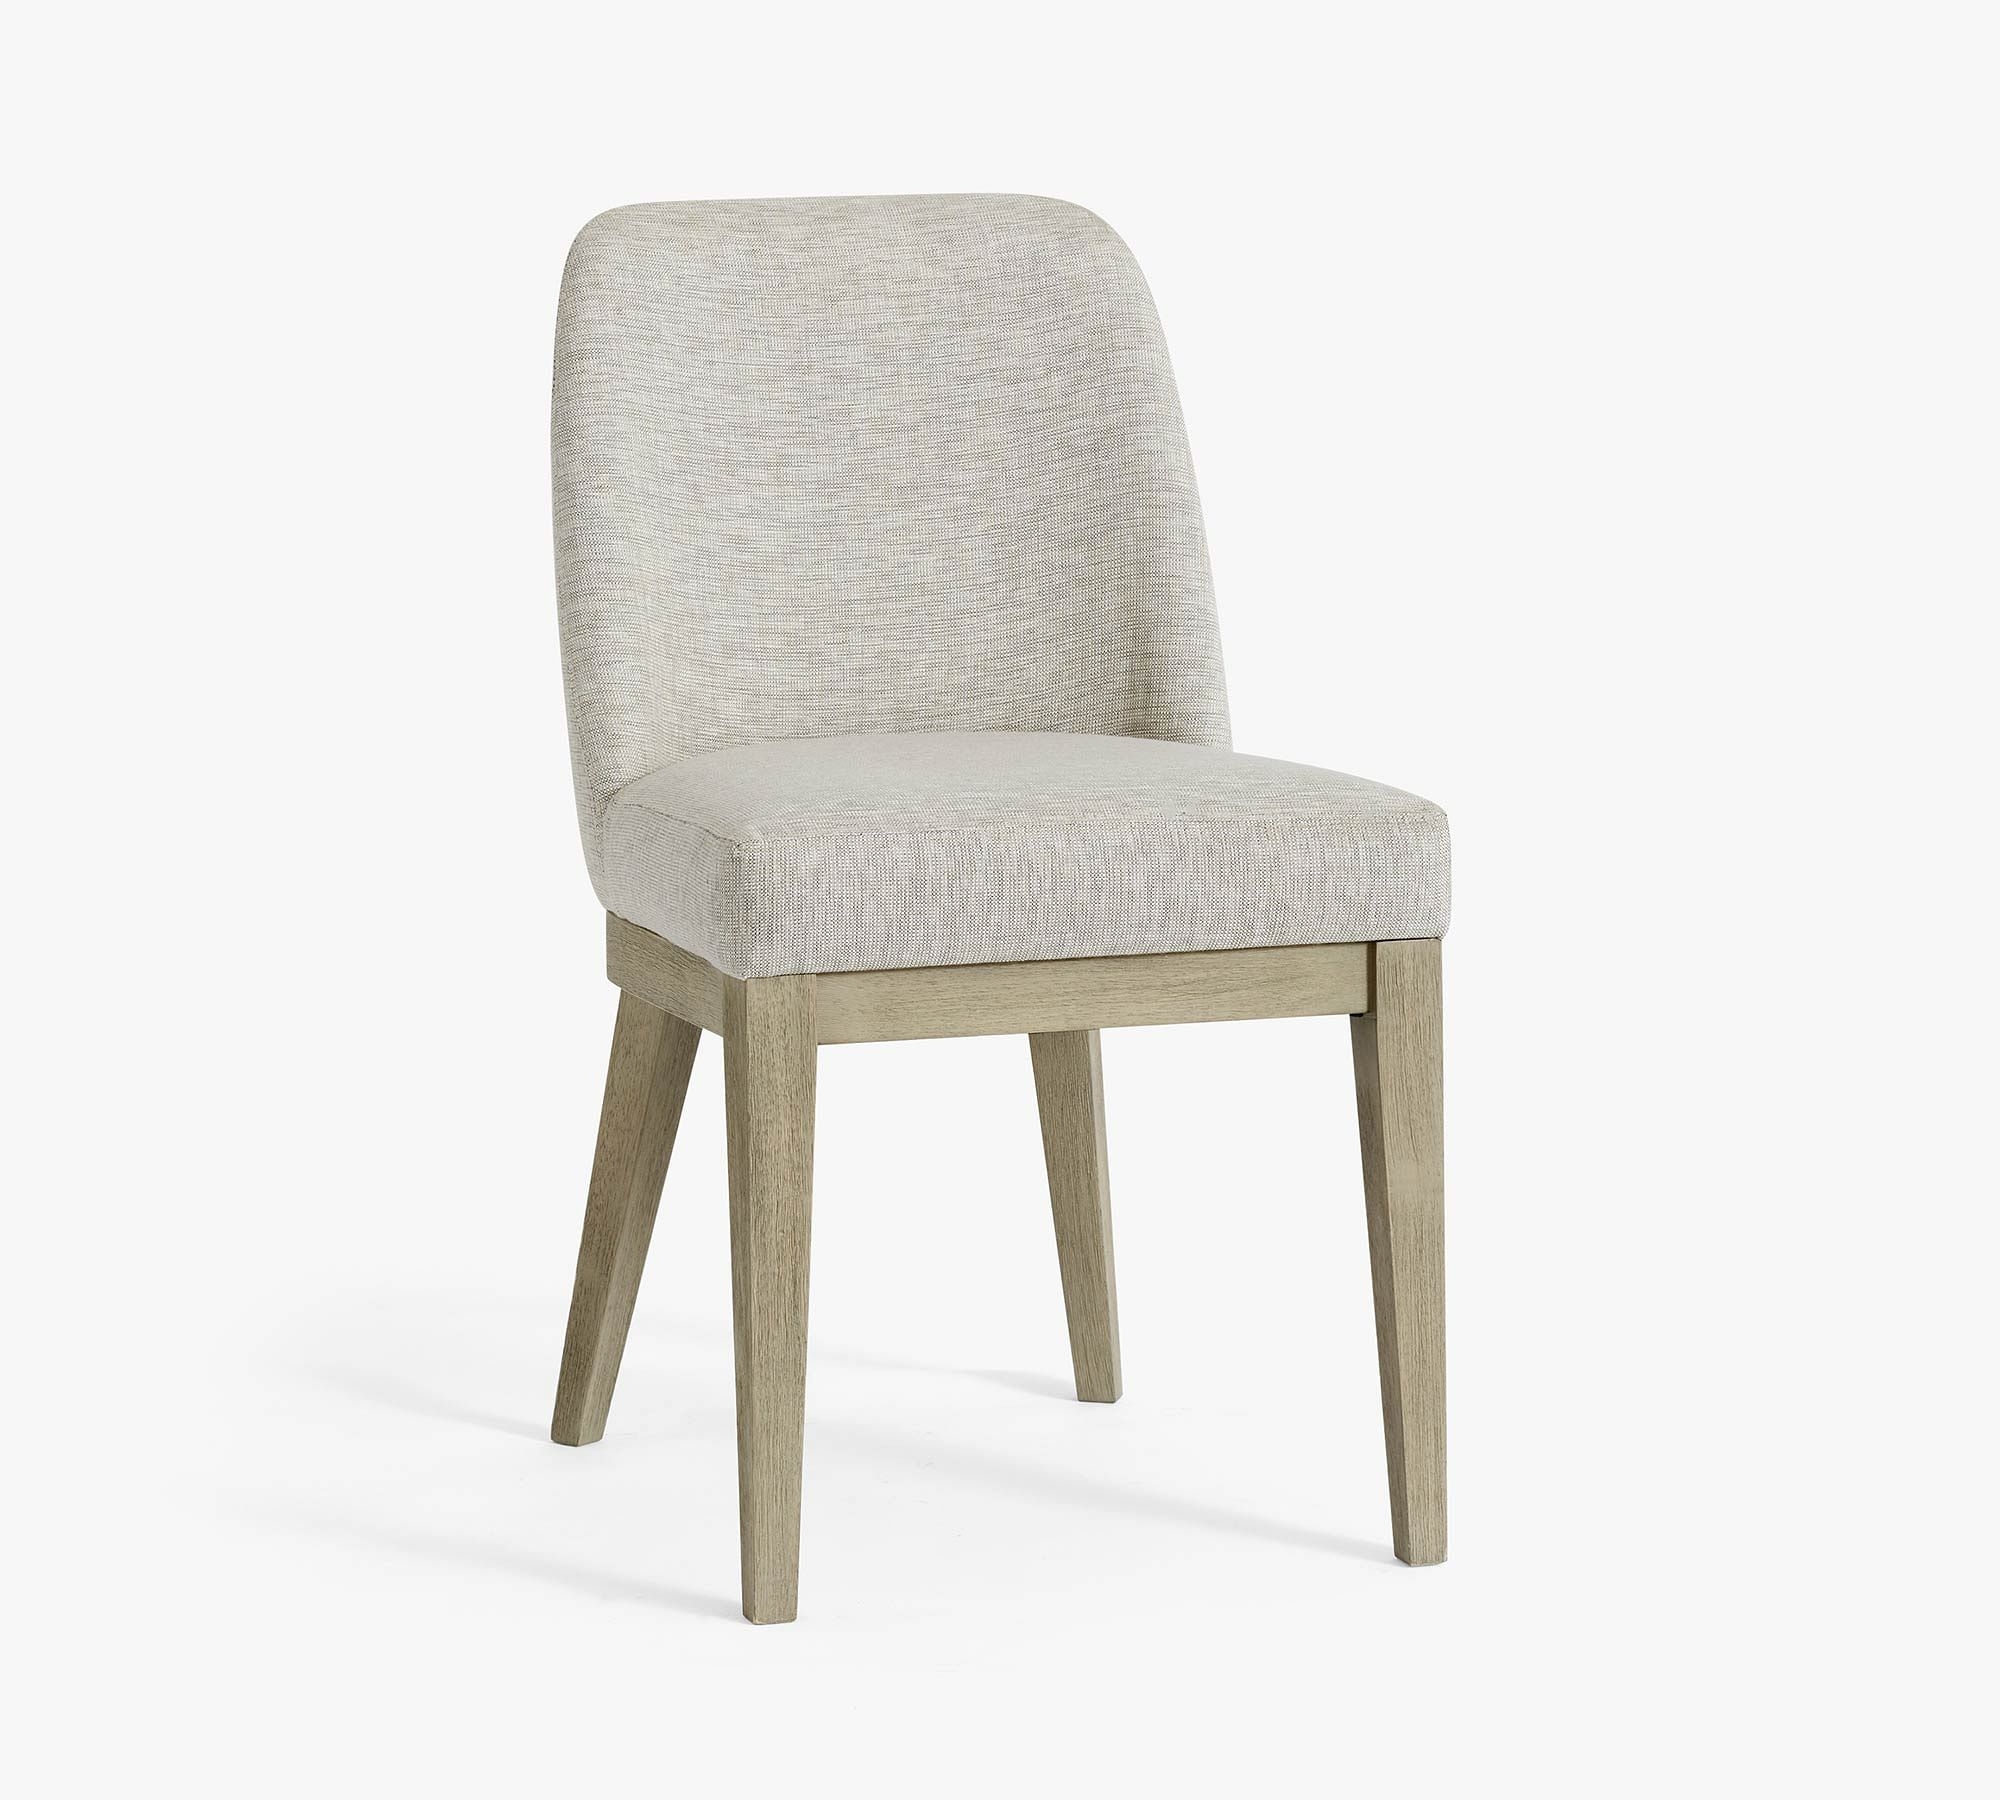 Layton Upholstered Side Dining Chair, Seadrift Legs, Performance Heathered Basketweave Dove - Image 2